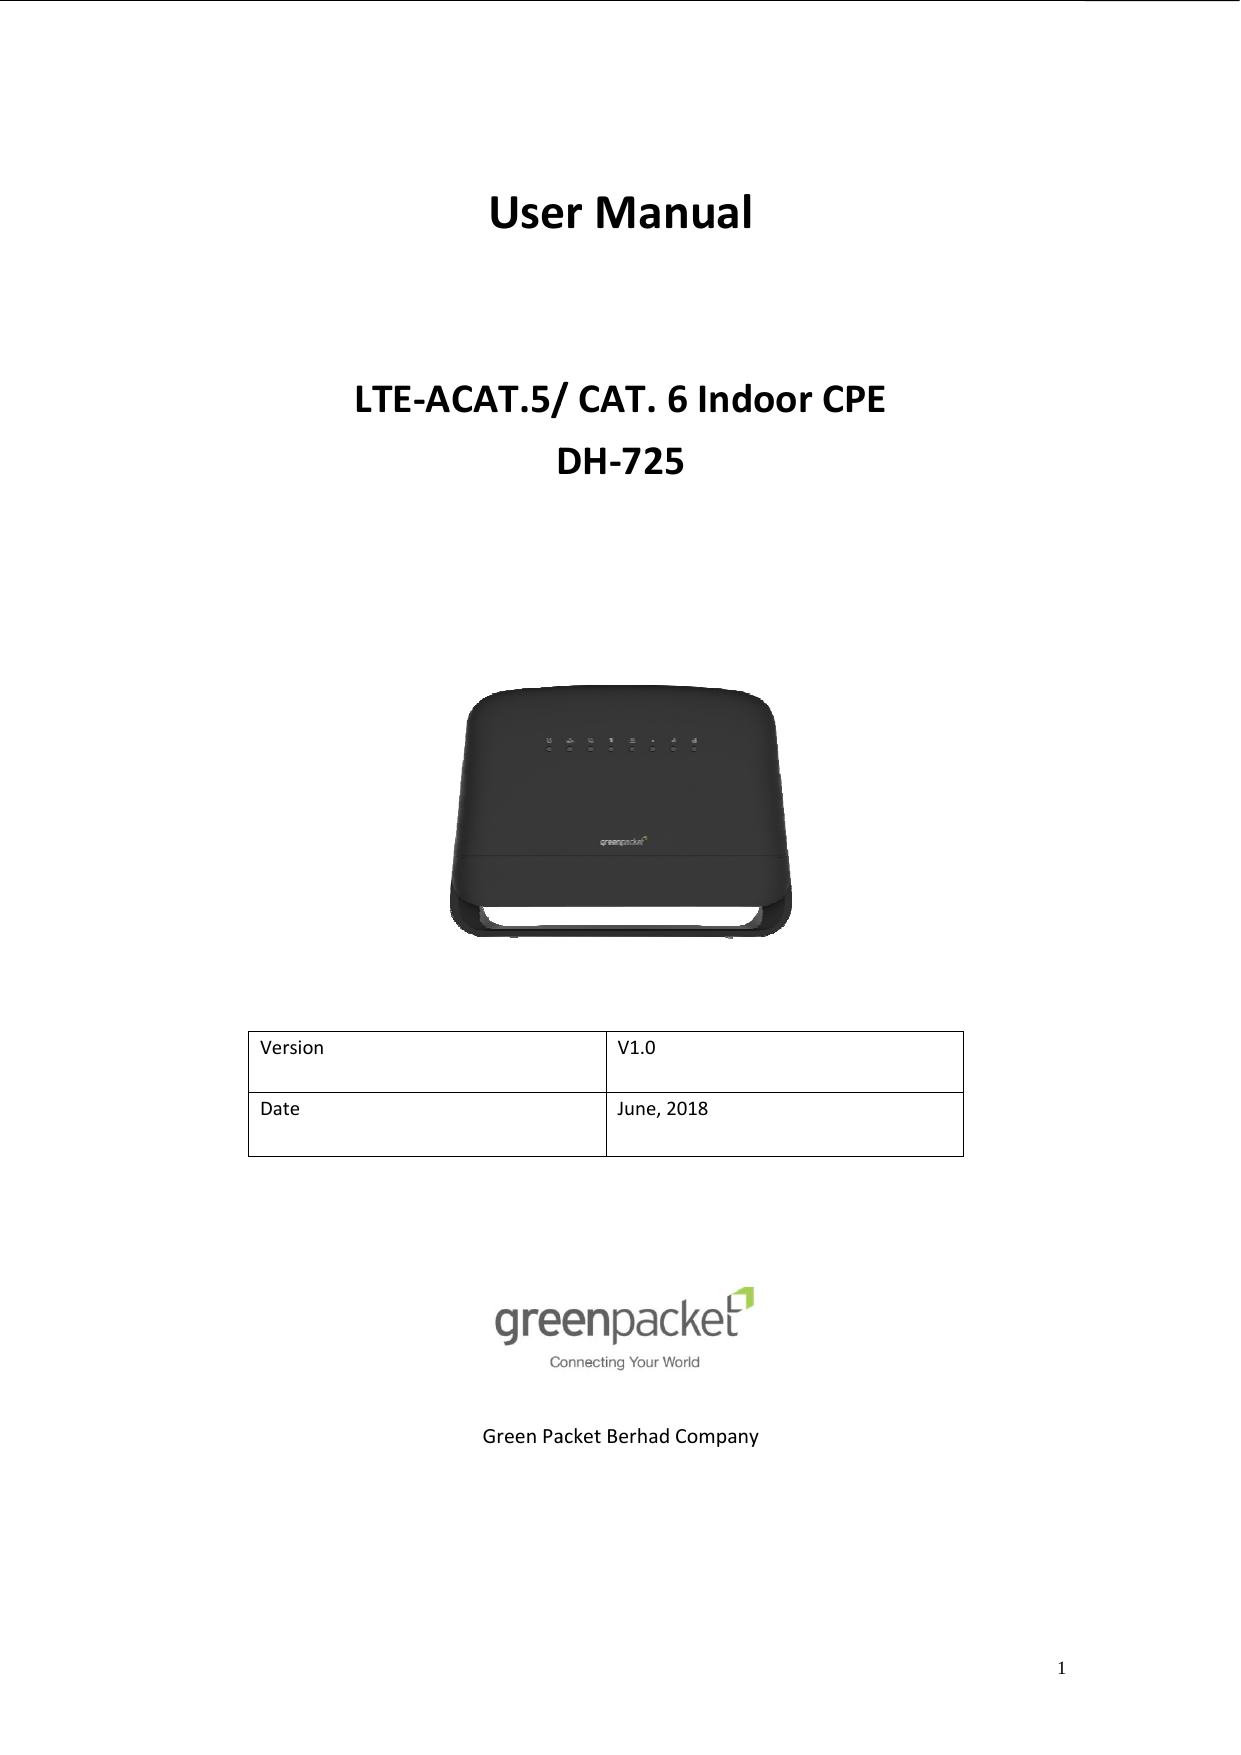 green-packet-berhad-dh725-gp-dh-725-lte-cat-6-wi-fi-router-user-manual-user-manual